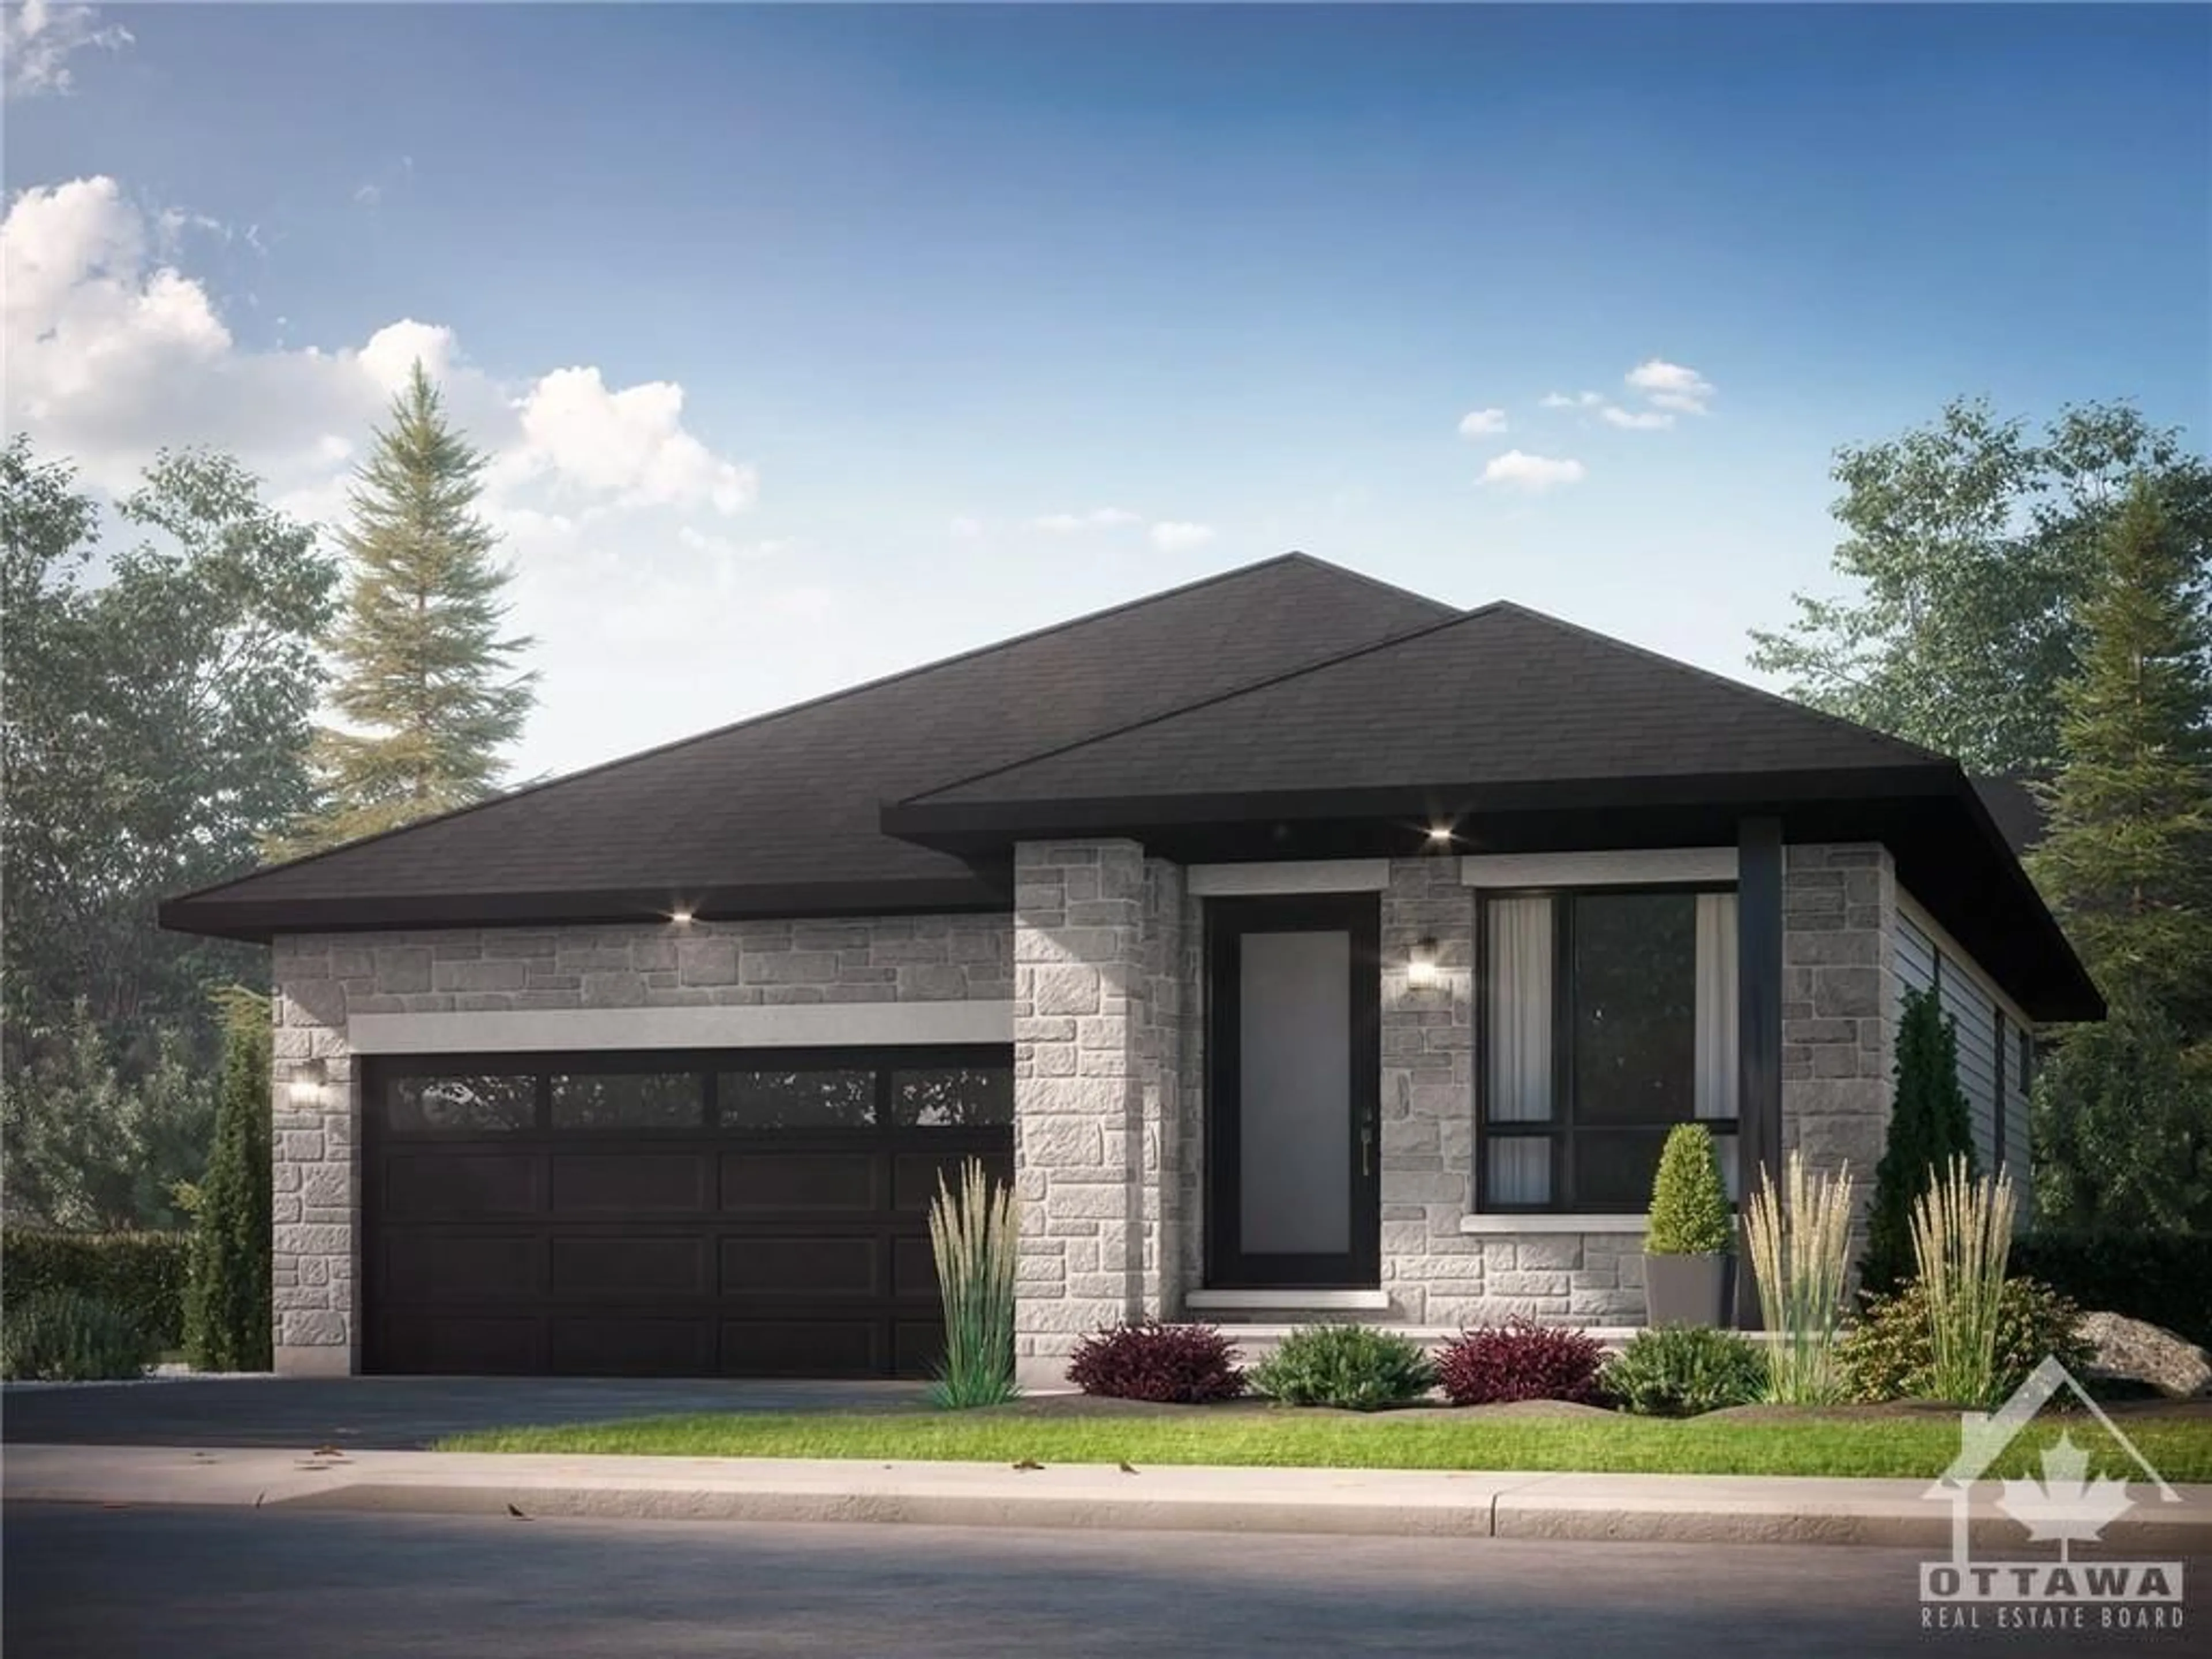 Home with brick exterior material for 121 O'DONOVAN Dr, Carleton Place Ontario K7C 0S2